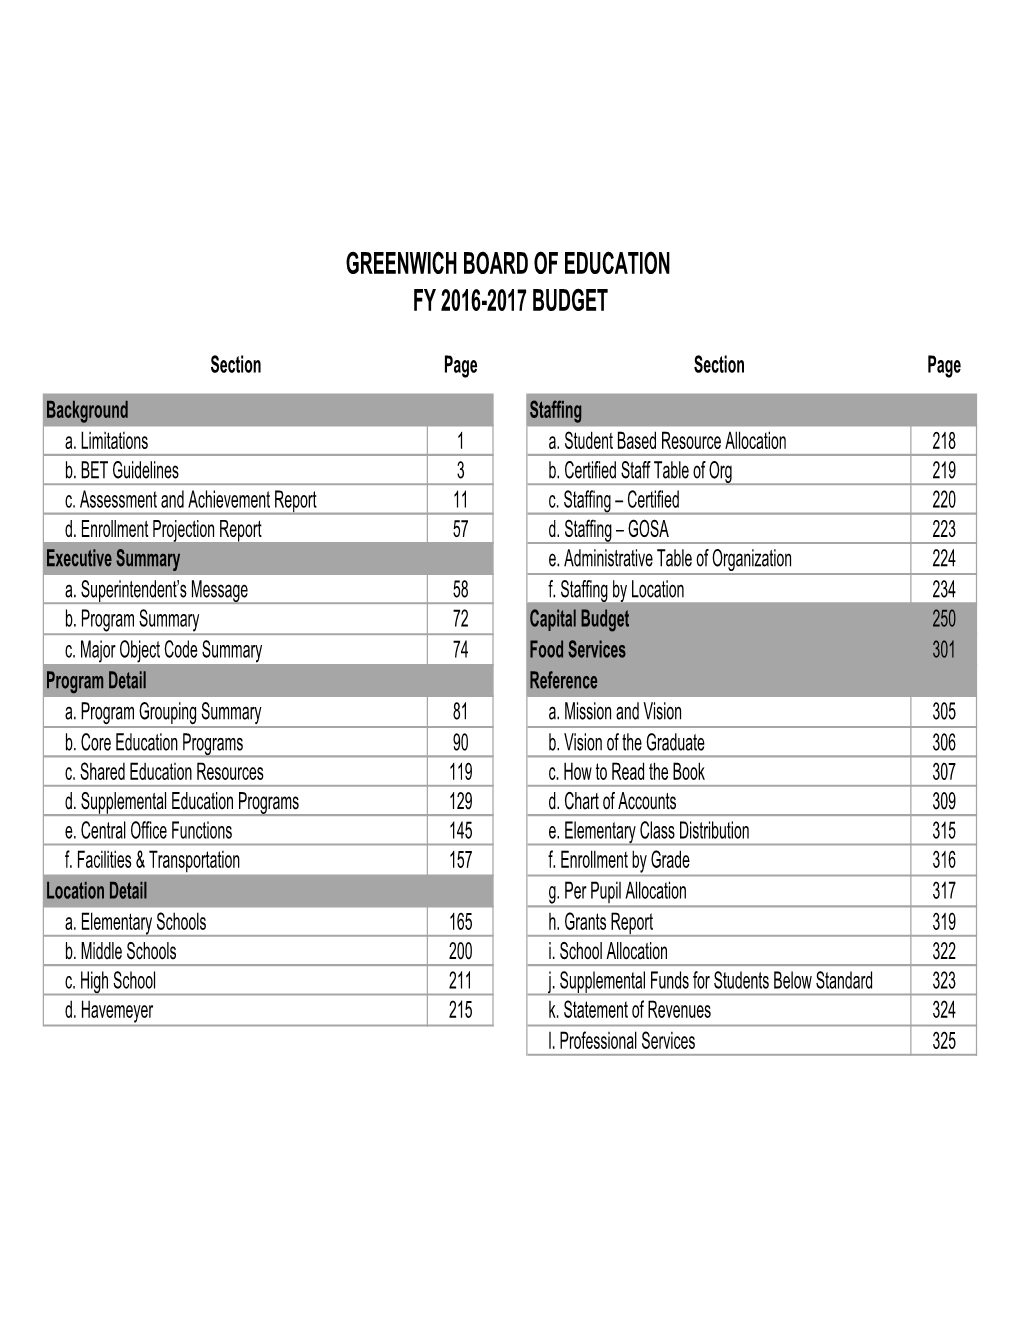 Fy 2016-2017 Budget Greenwich Board of Education